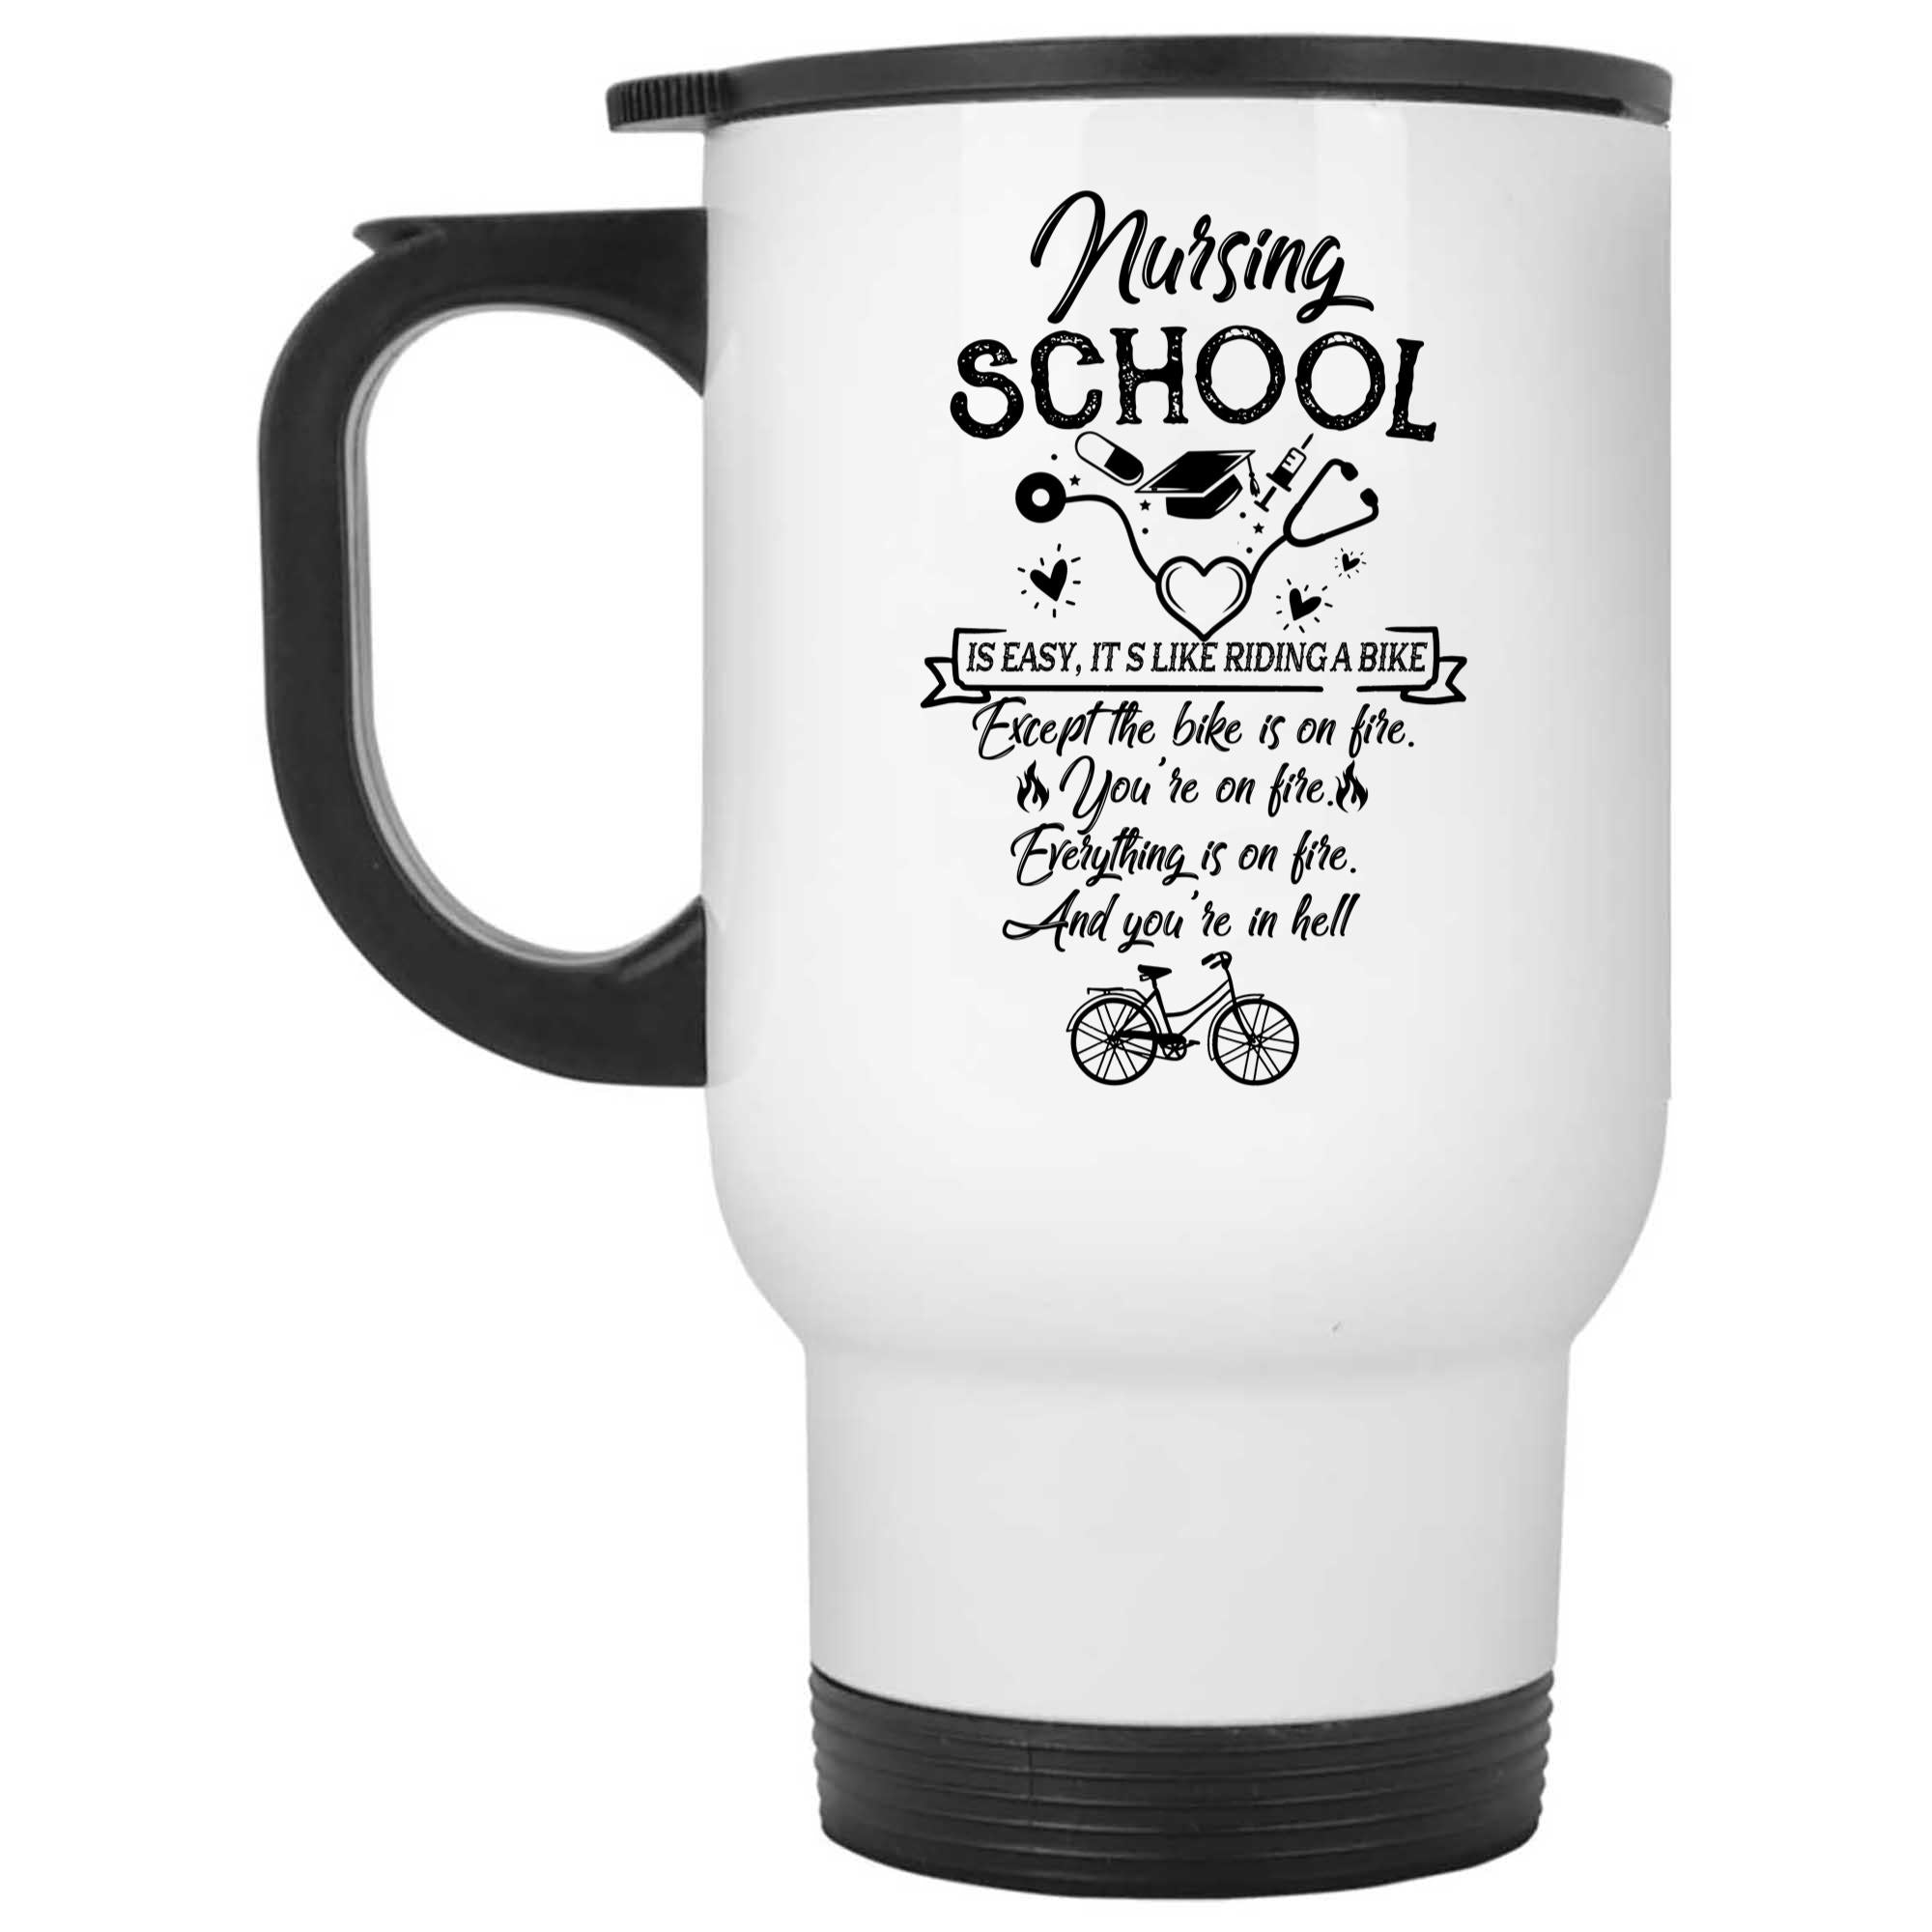 Skitongifts Coffee Mug Funny Ceramic Novelty Nursing School Is Easy, It's Like Riding A Bike nd7KNy3